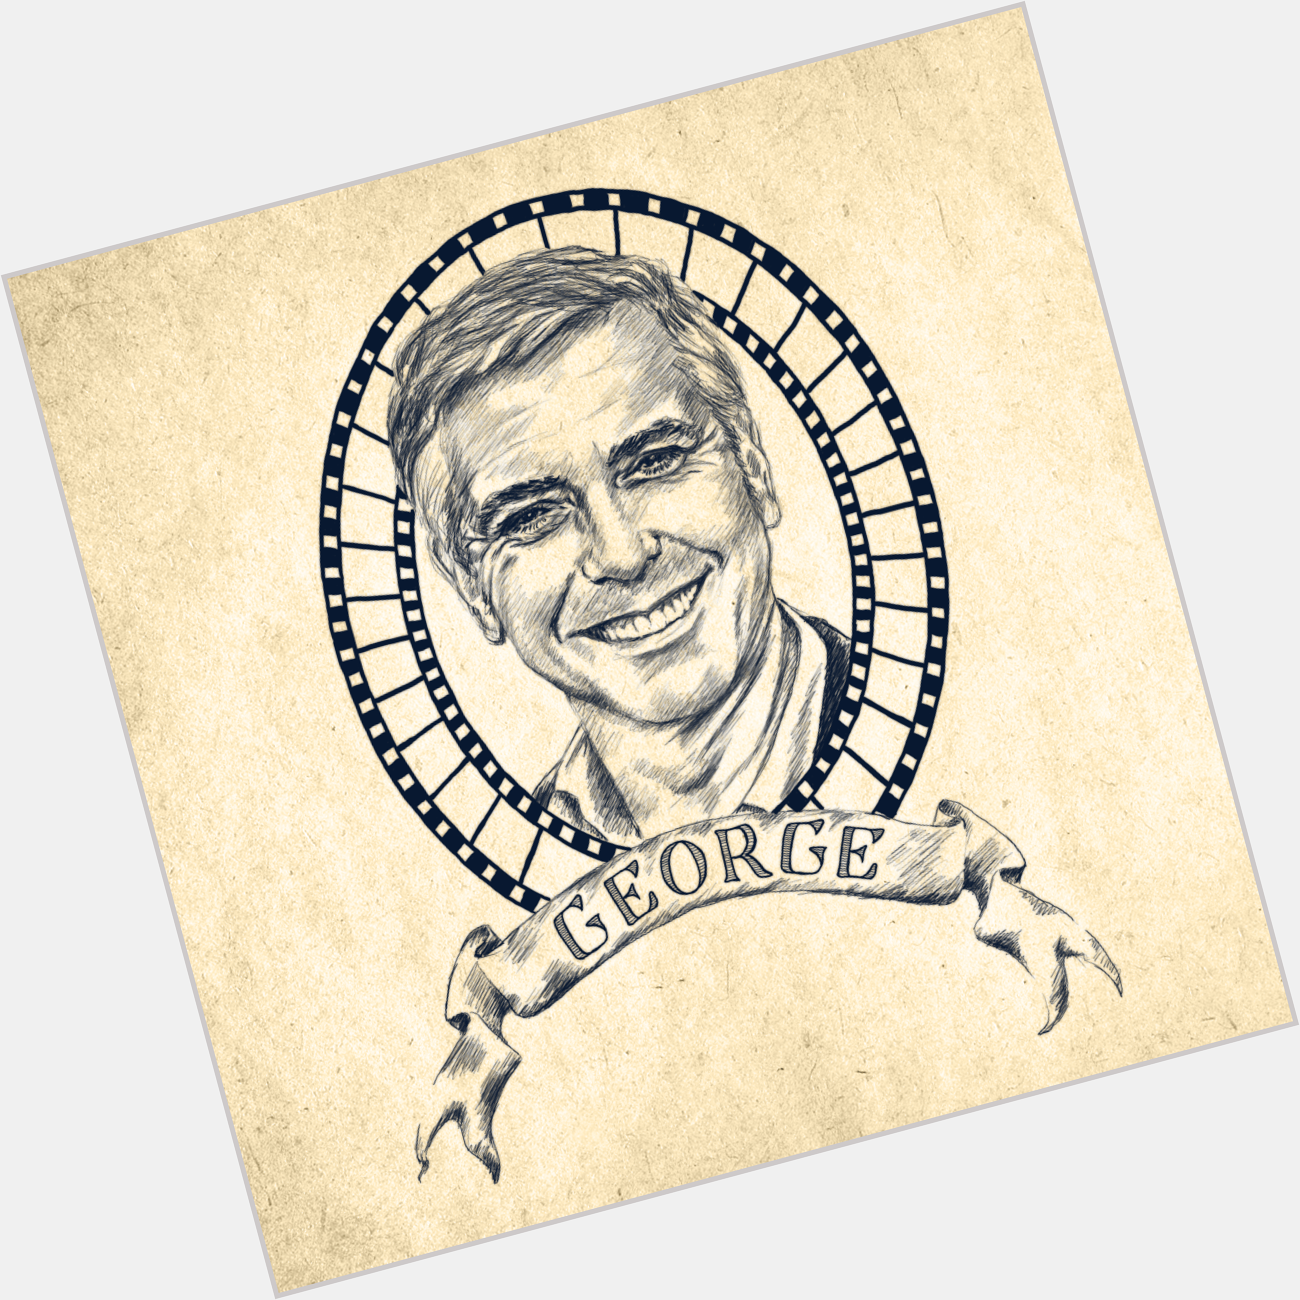 Happy birthday to Kentuckian George Clooney!  